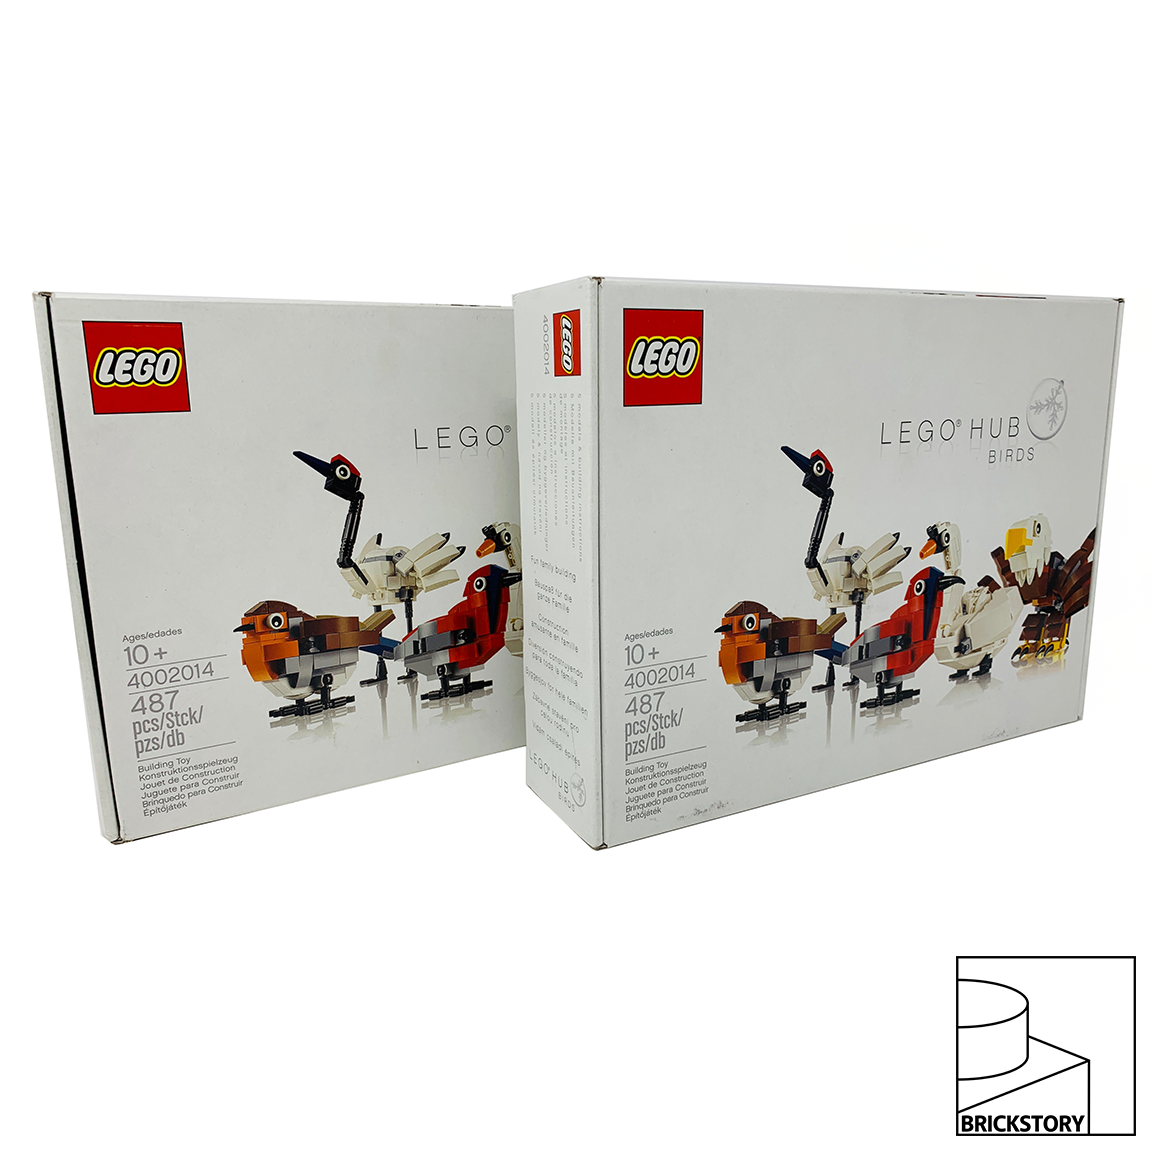 4002014 LEGO HUB Birds | BRICKNOWLOGY - Build Your Mind